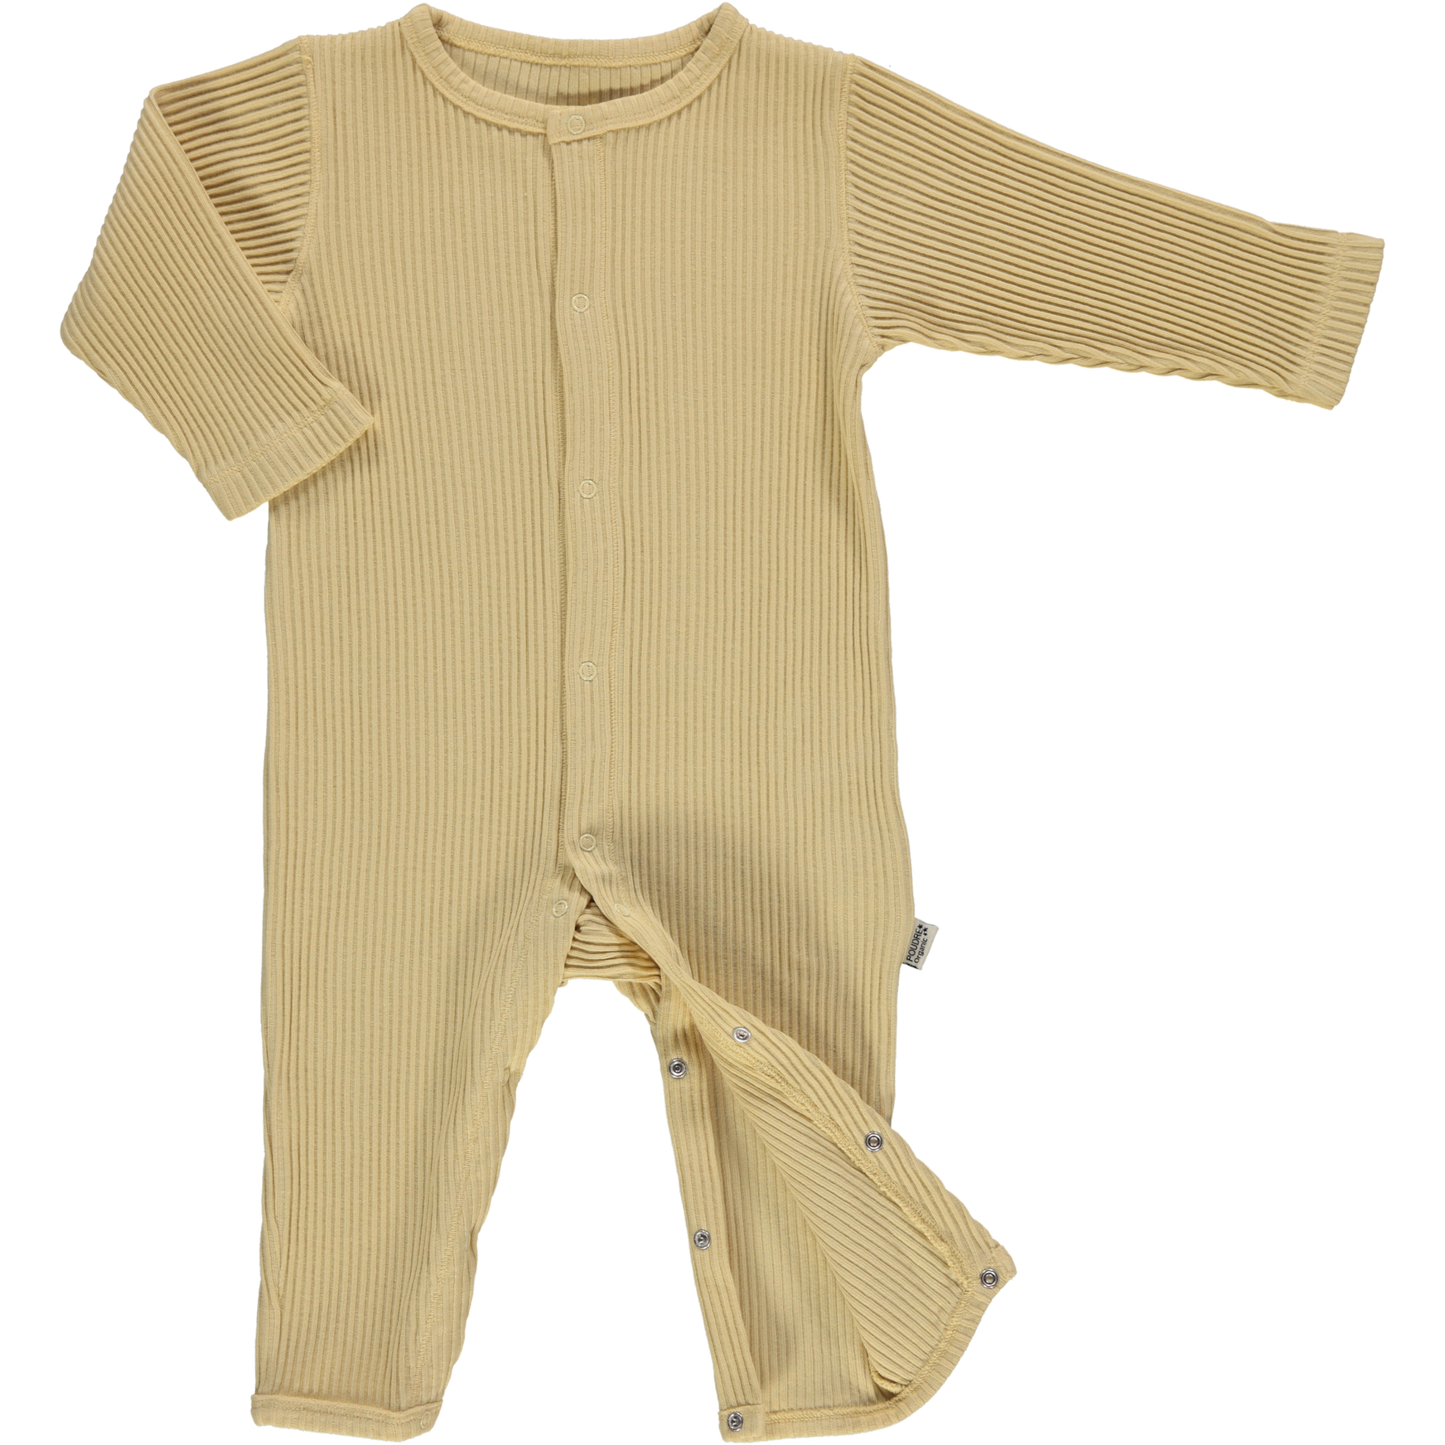 Pyjama Airelle gerippt aus Bio Baumwolle, Sahara Sun